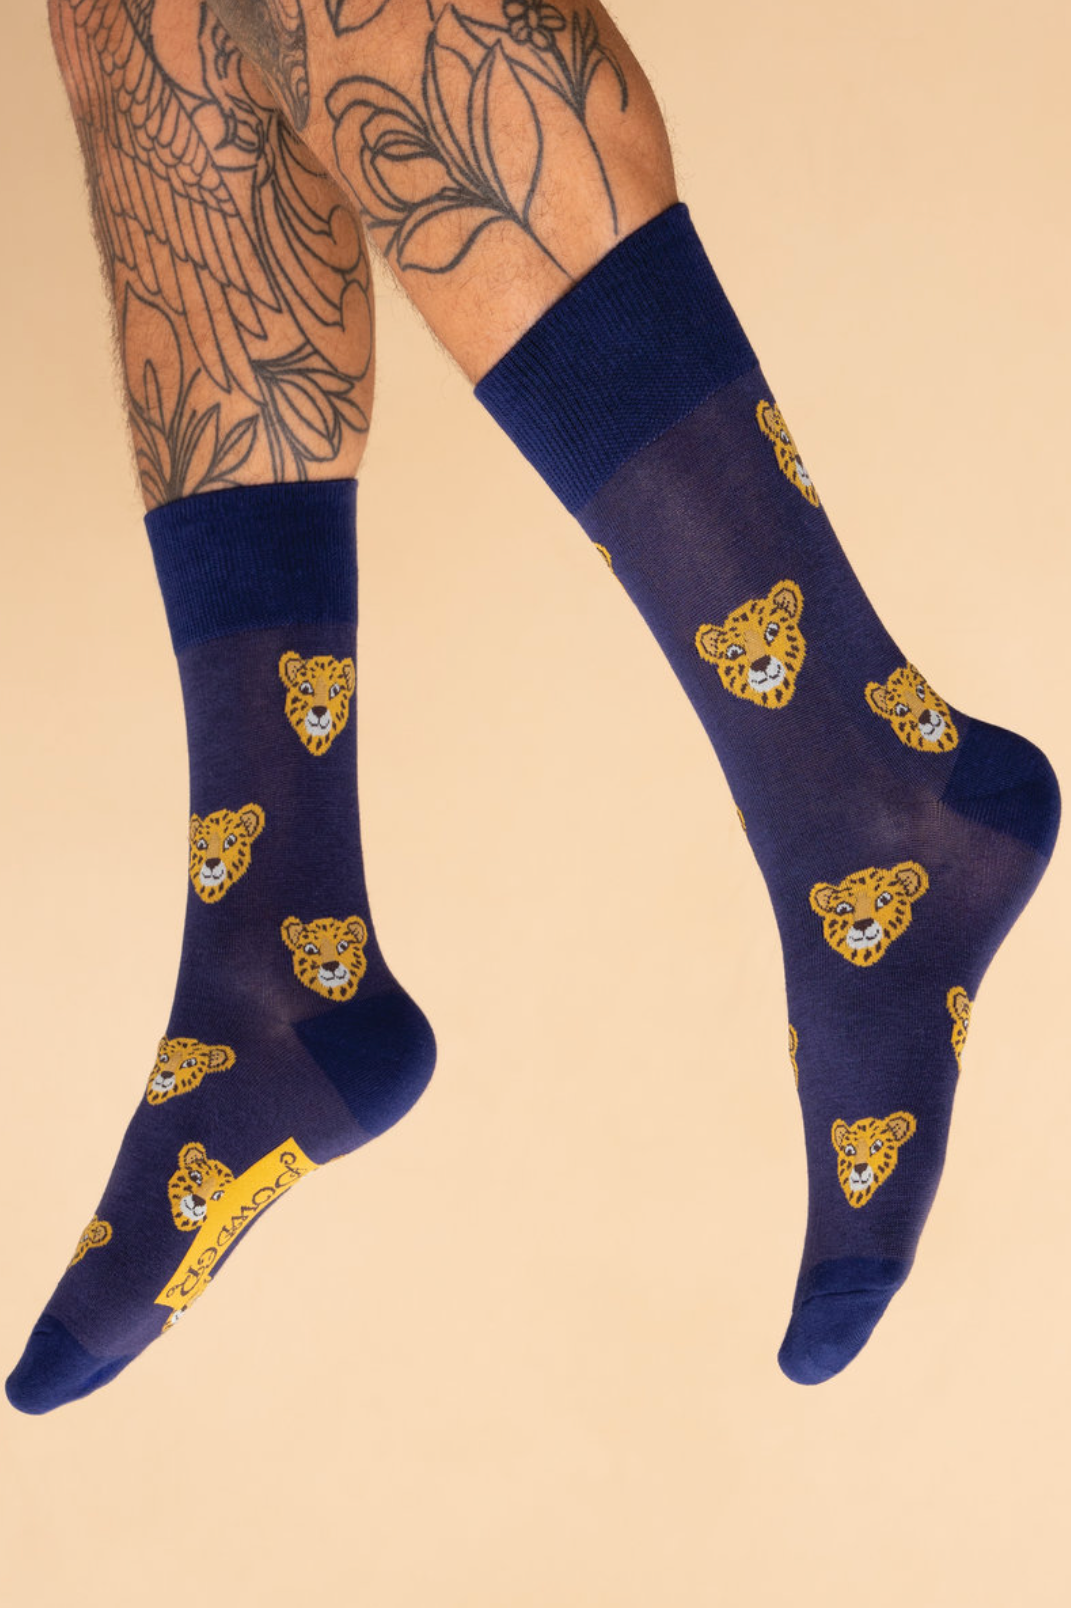 Powder UK Men's Charming Cheetah socks navy blue 